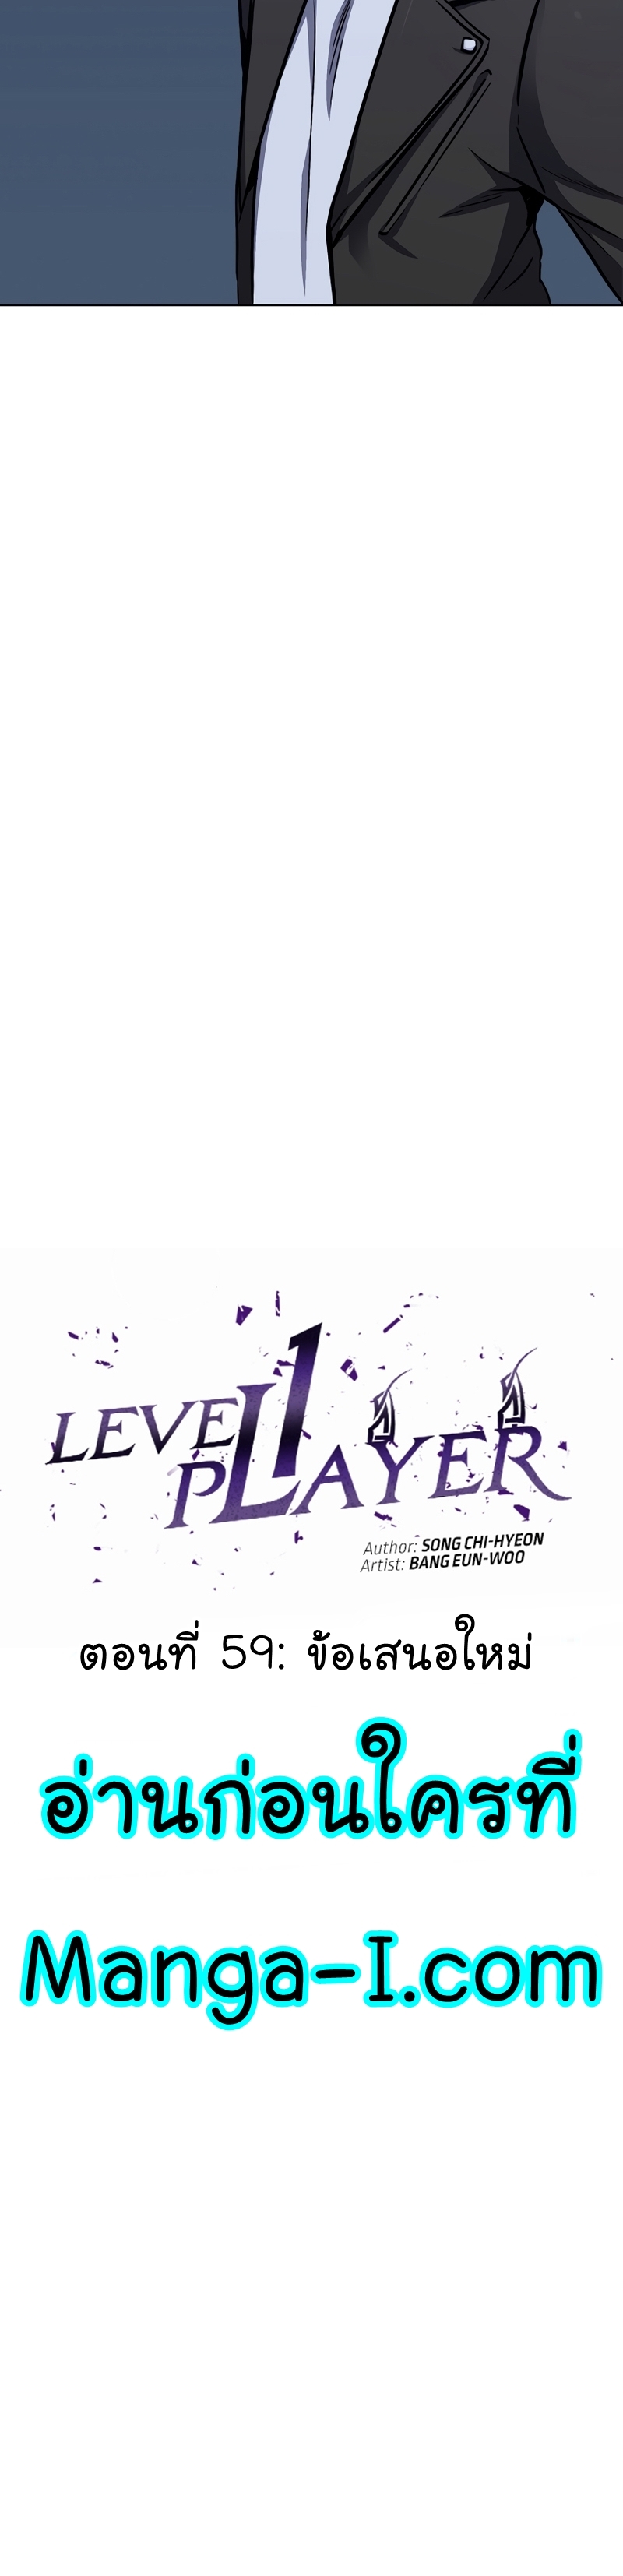 Level 1 Player 59 12